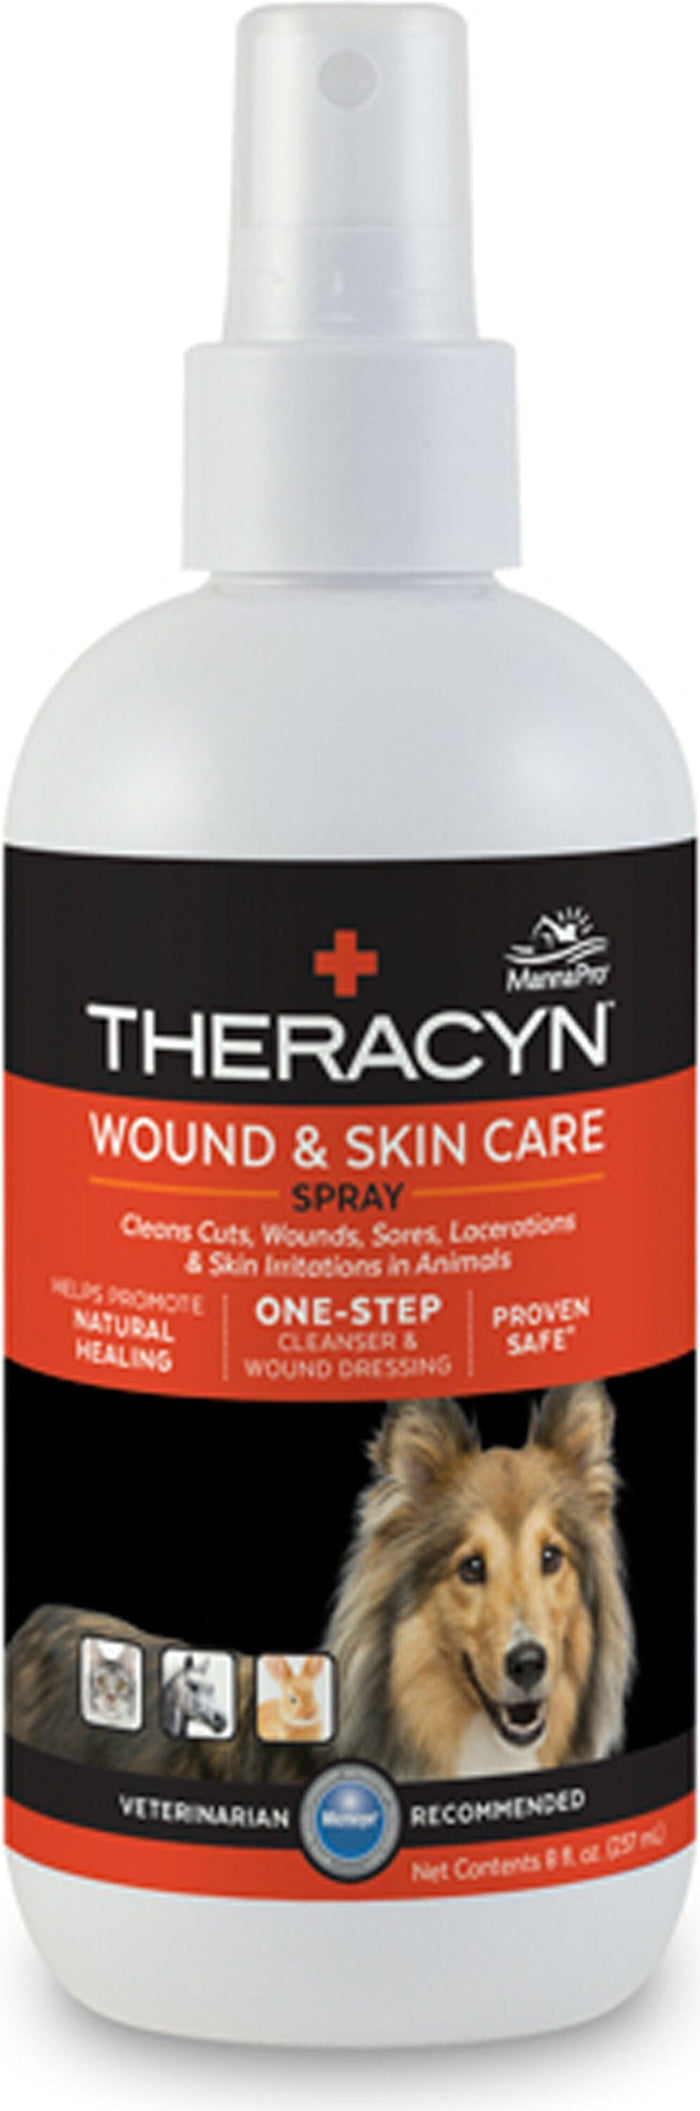 Theracyn Wound & Skin Care Spray Pet Veterinary Supplies Sprays/Daubers - 8 Oz